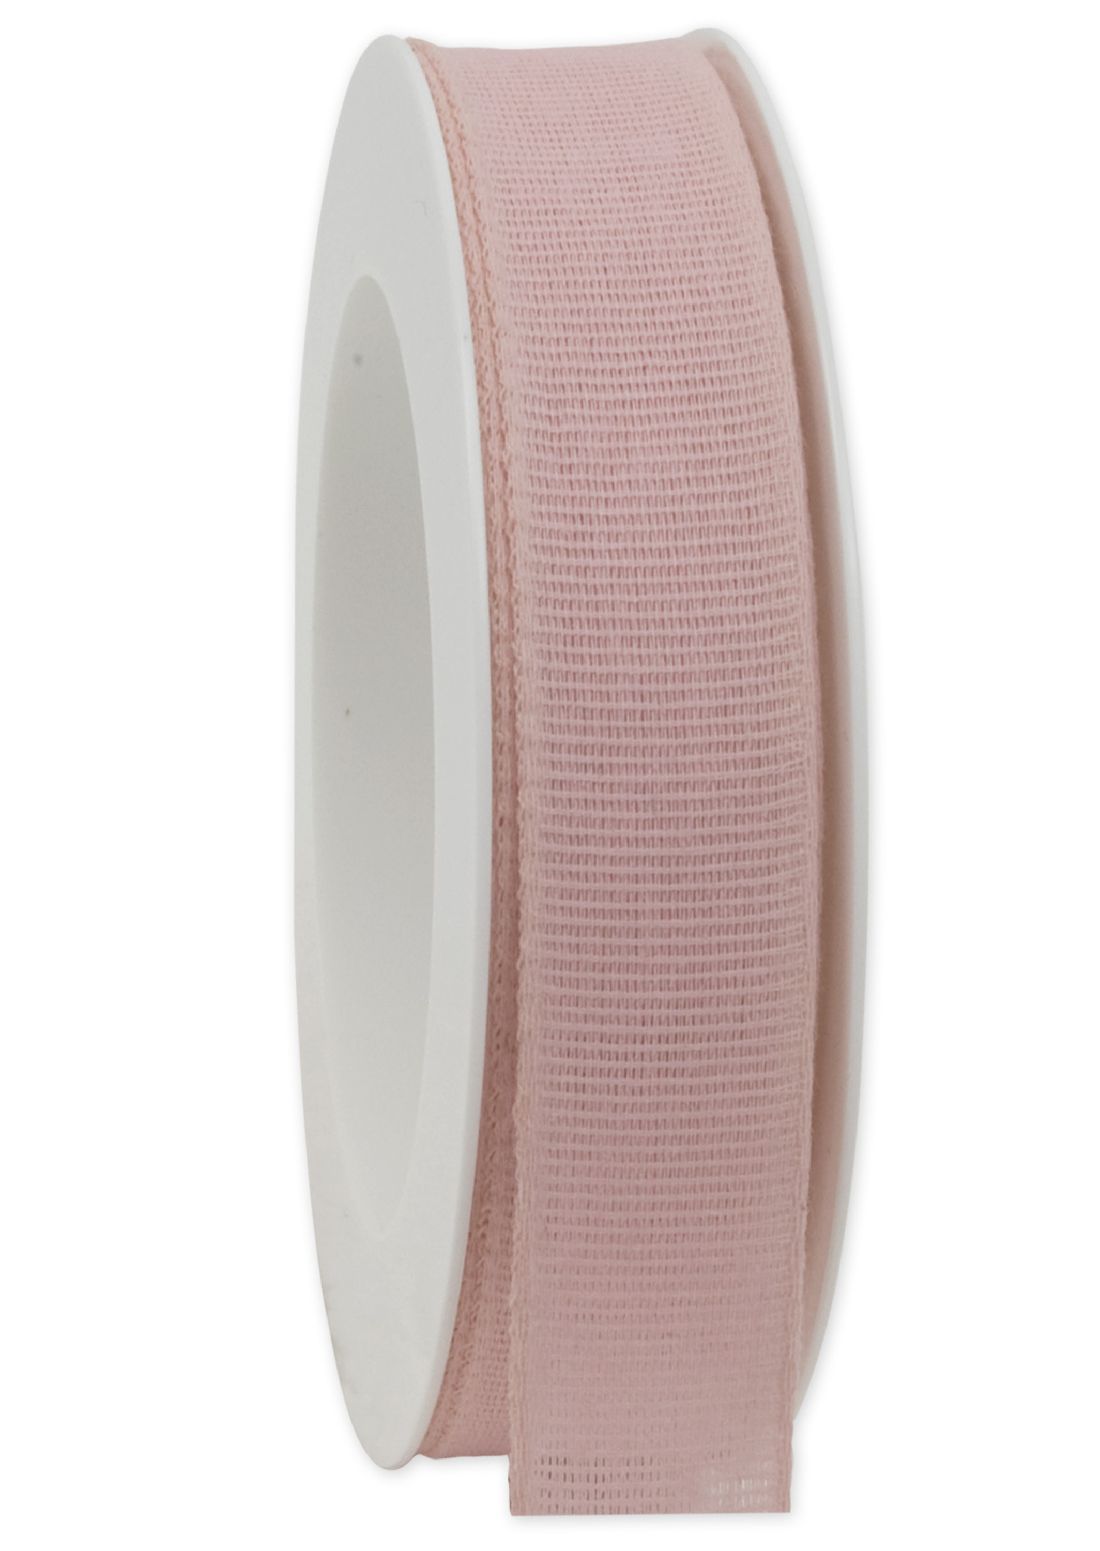 Basicband NATURE rosa 21 biologisch abbaubar B:25mm L:20m Baumwollband 267